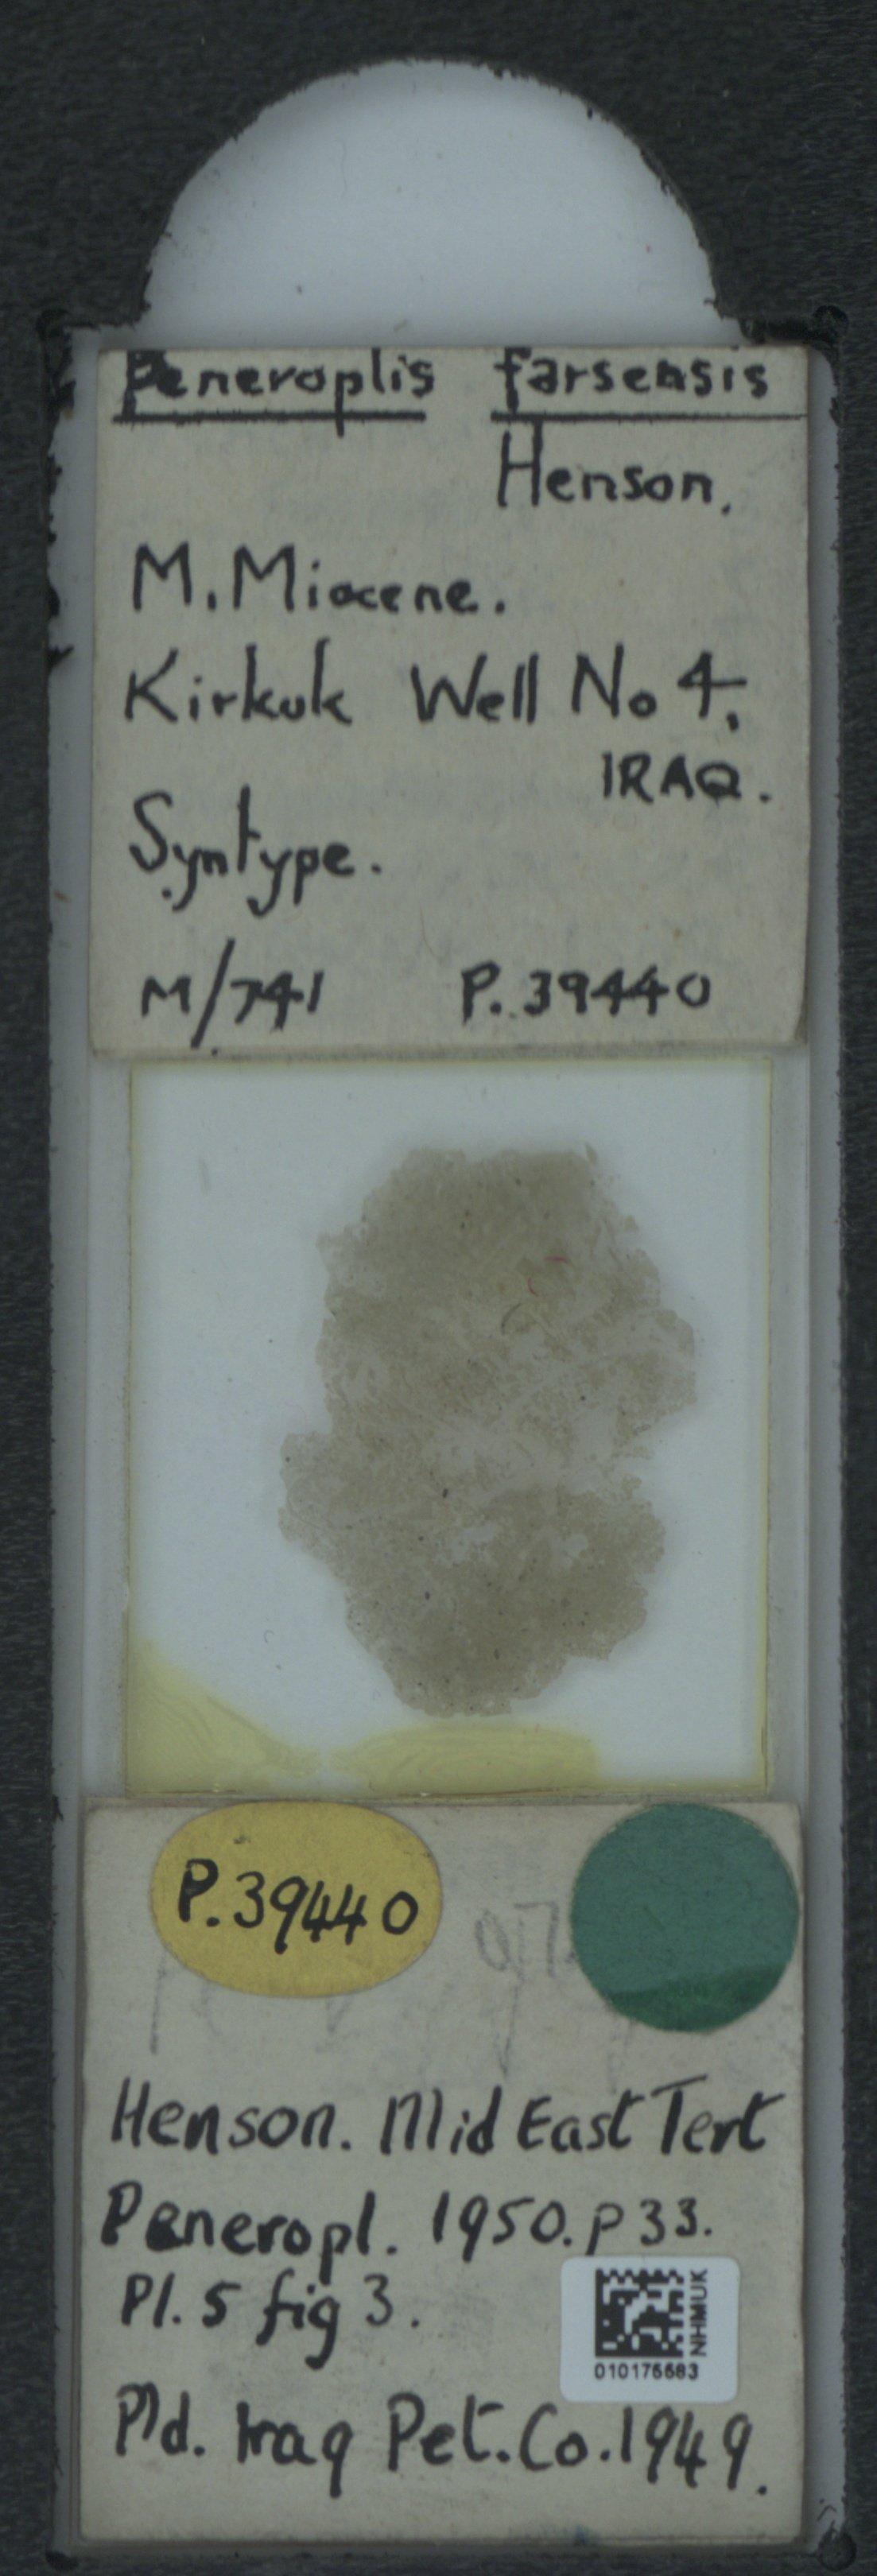 To NHMUK collection (Peneroplis farsensis Henson, 1950; Syntype; NHMUK:ecatalogue:2323355)